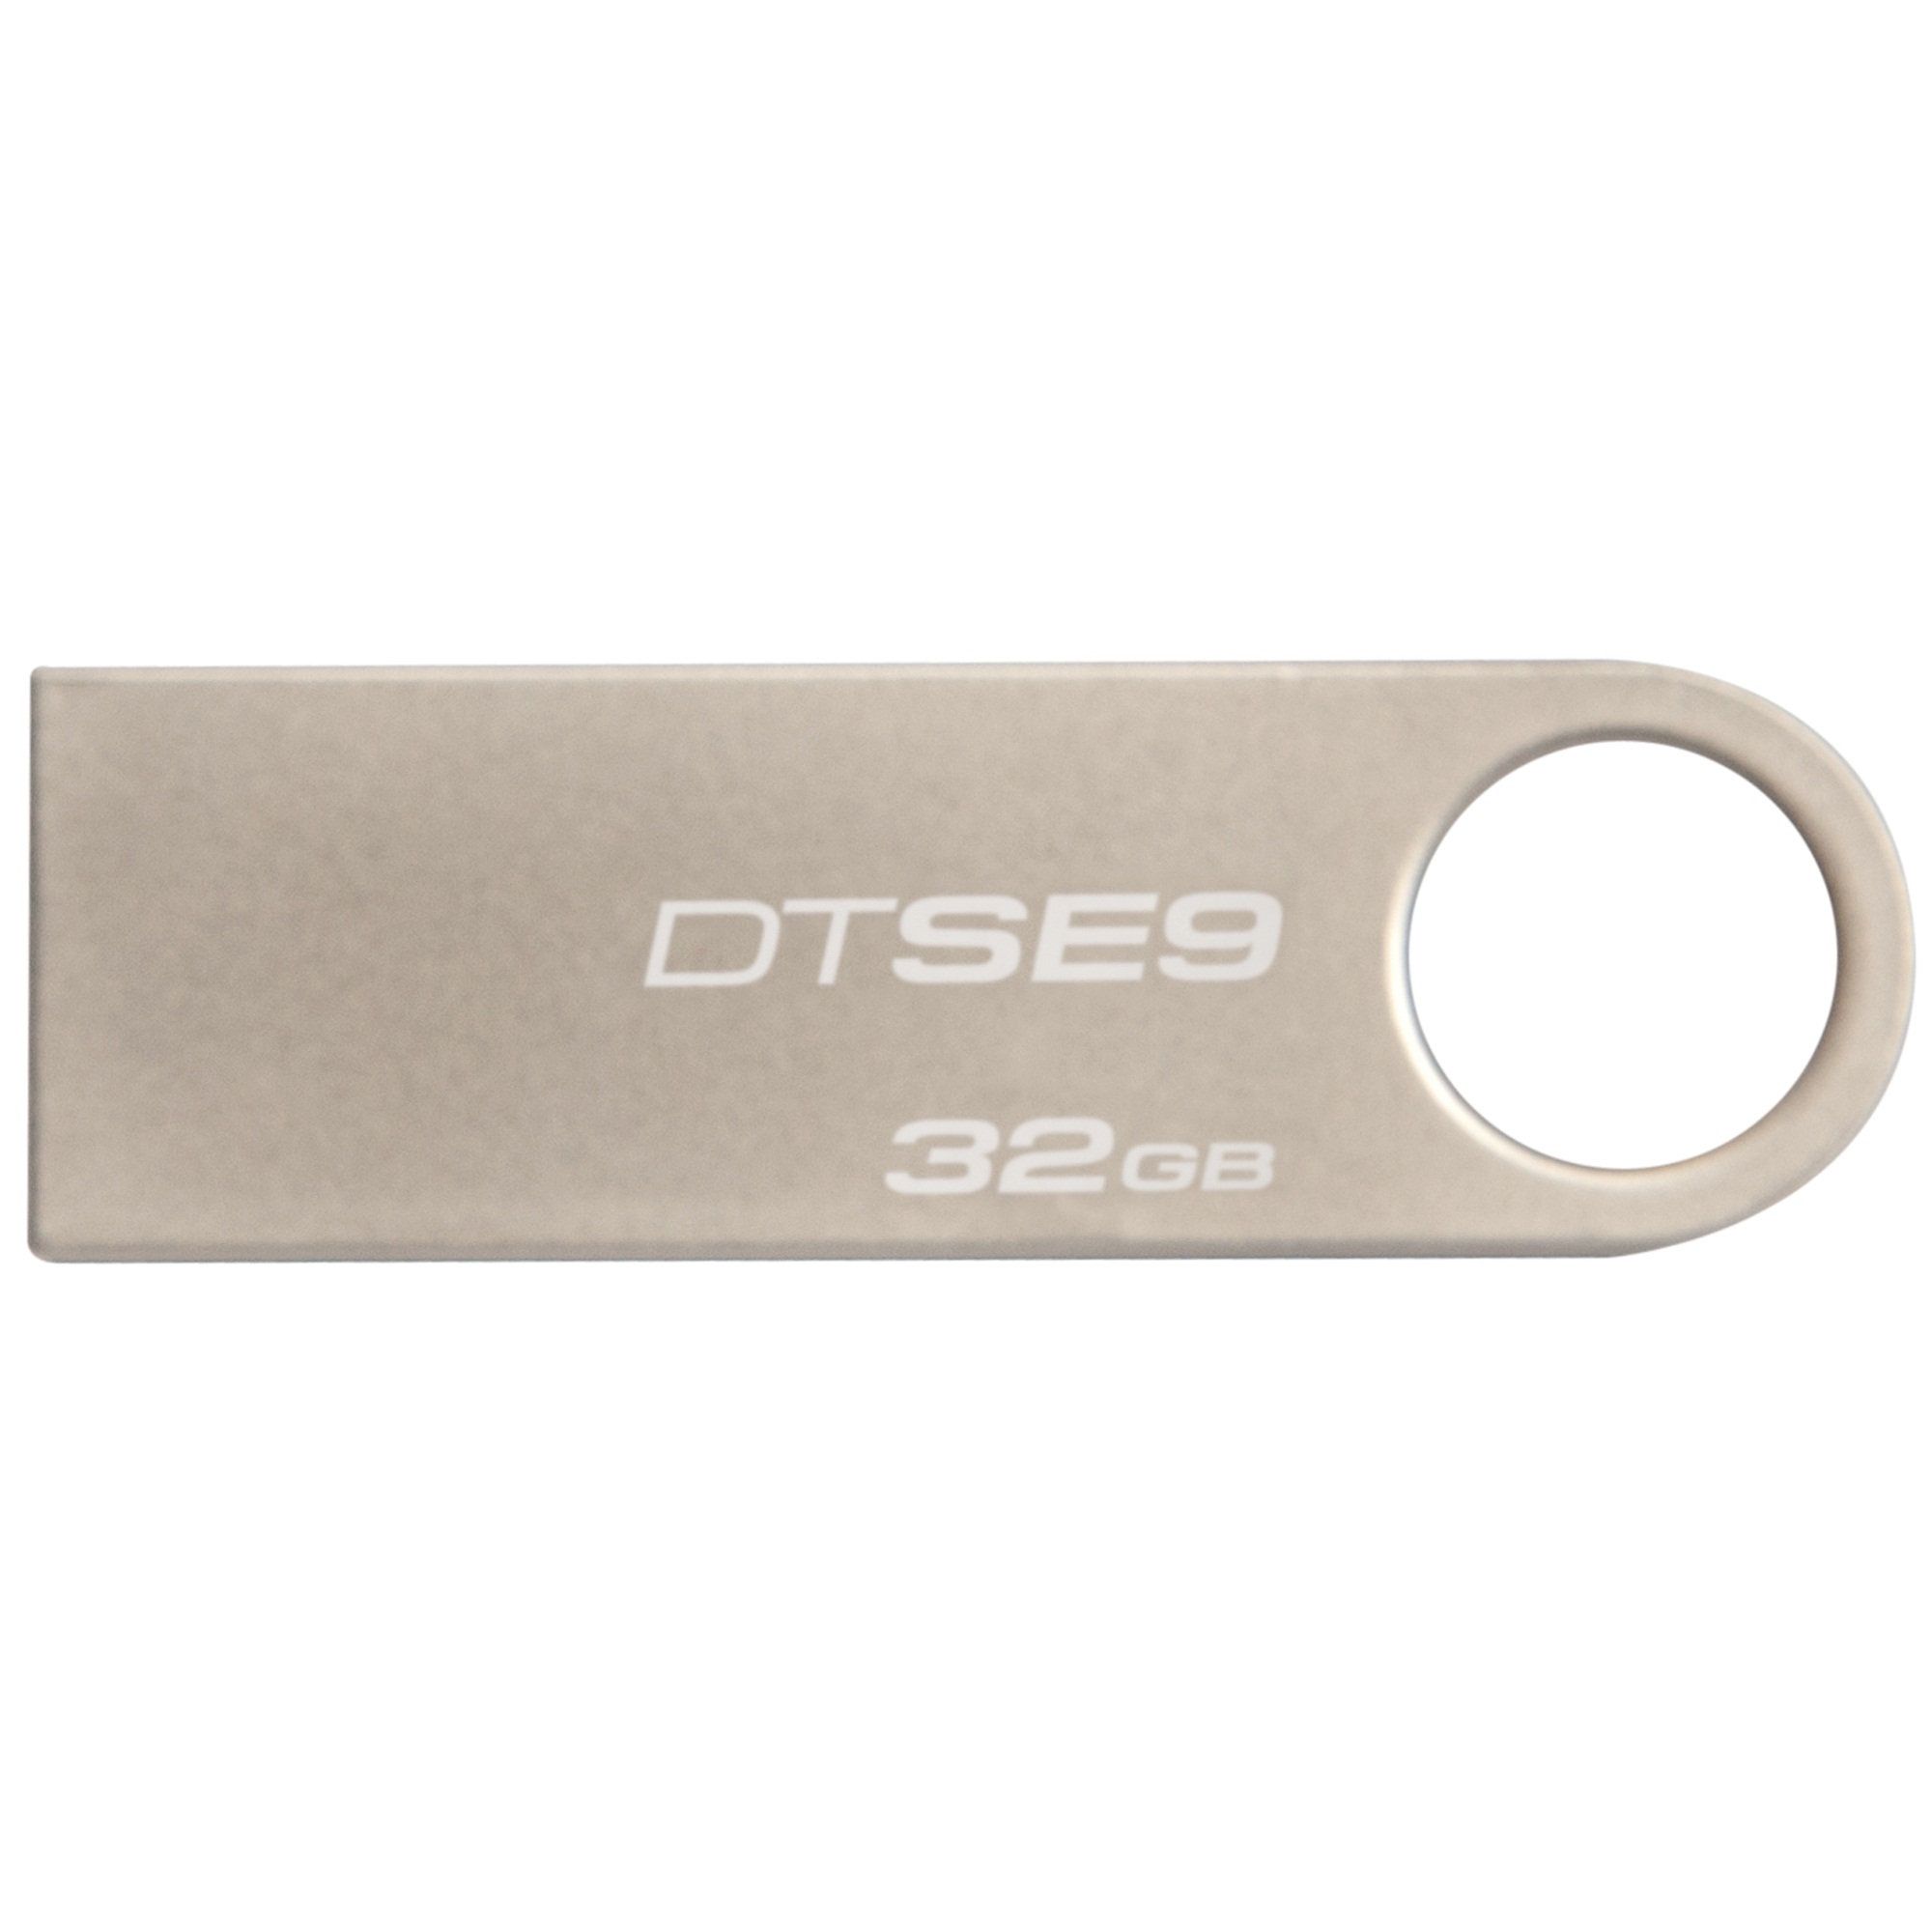 Memorie USB Kingston DataTraveler SE9, 32GB, USB 2.0